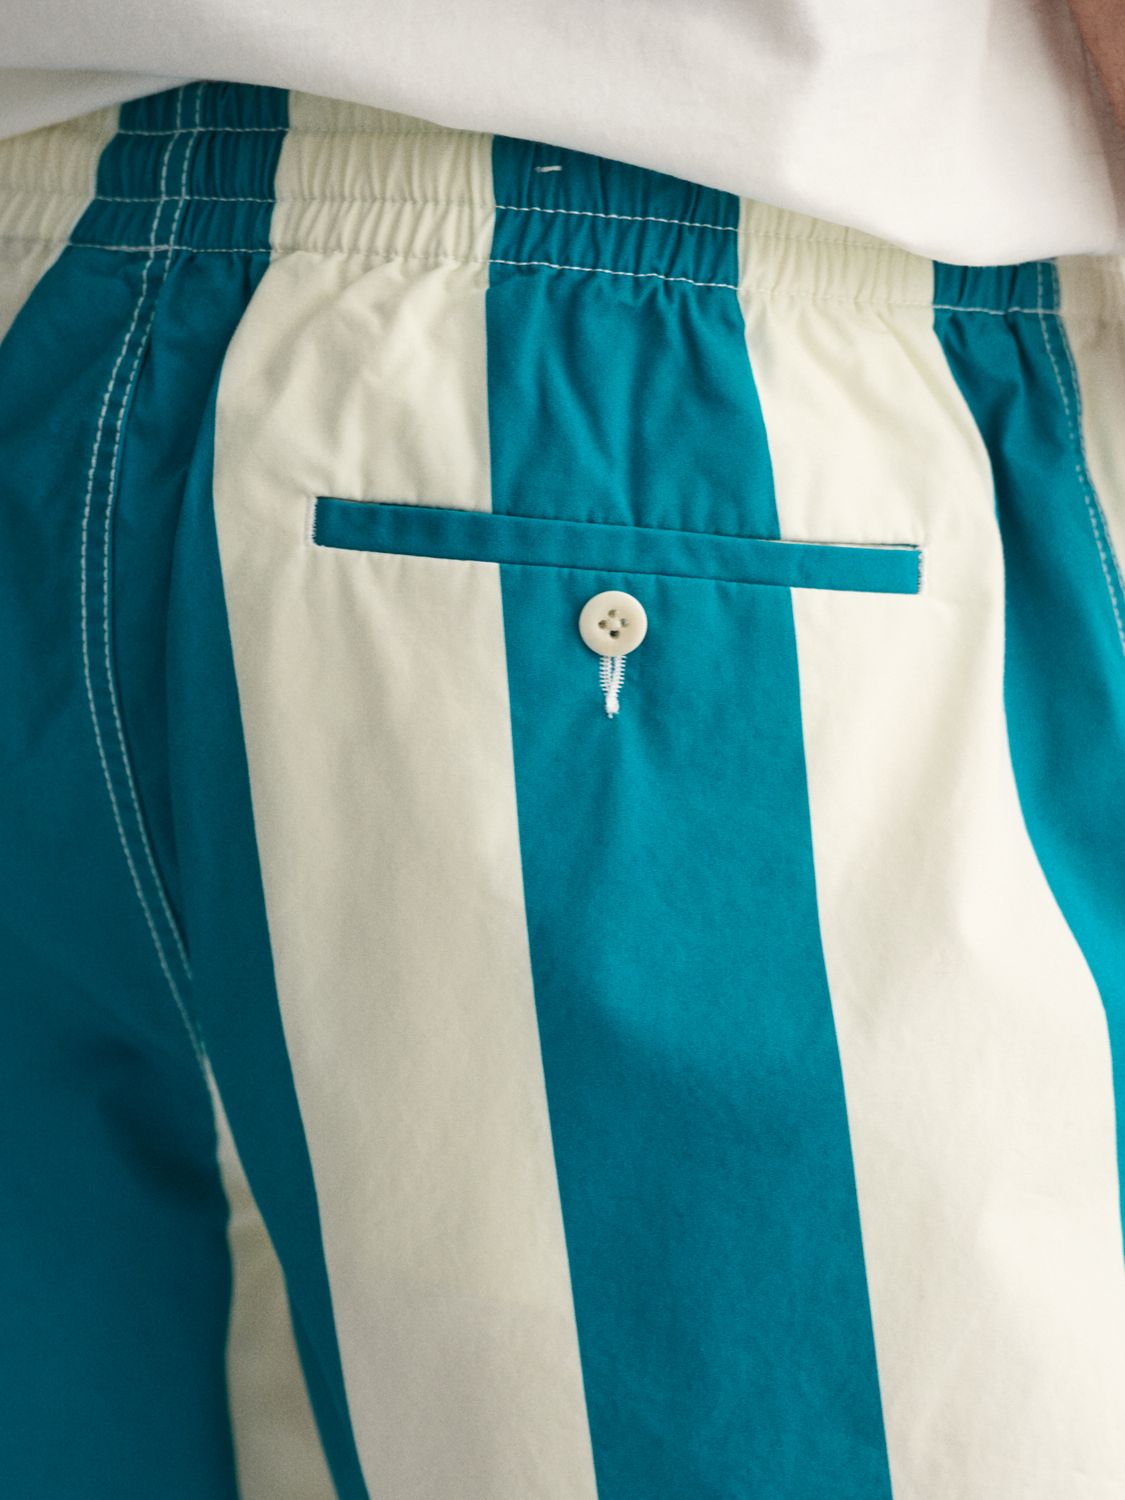 GANT Draw Cord Cotton Stripe Shorts, Blue/White, XXL